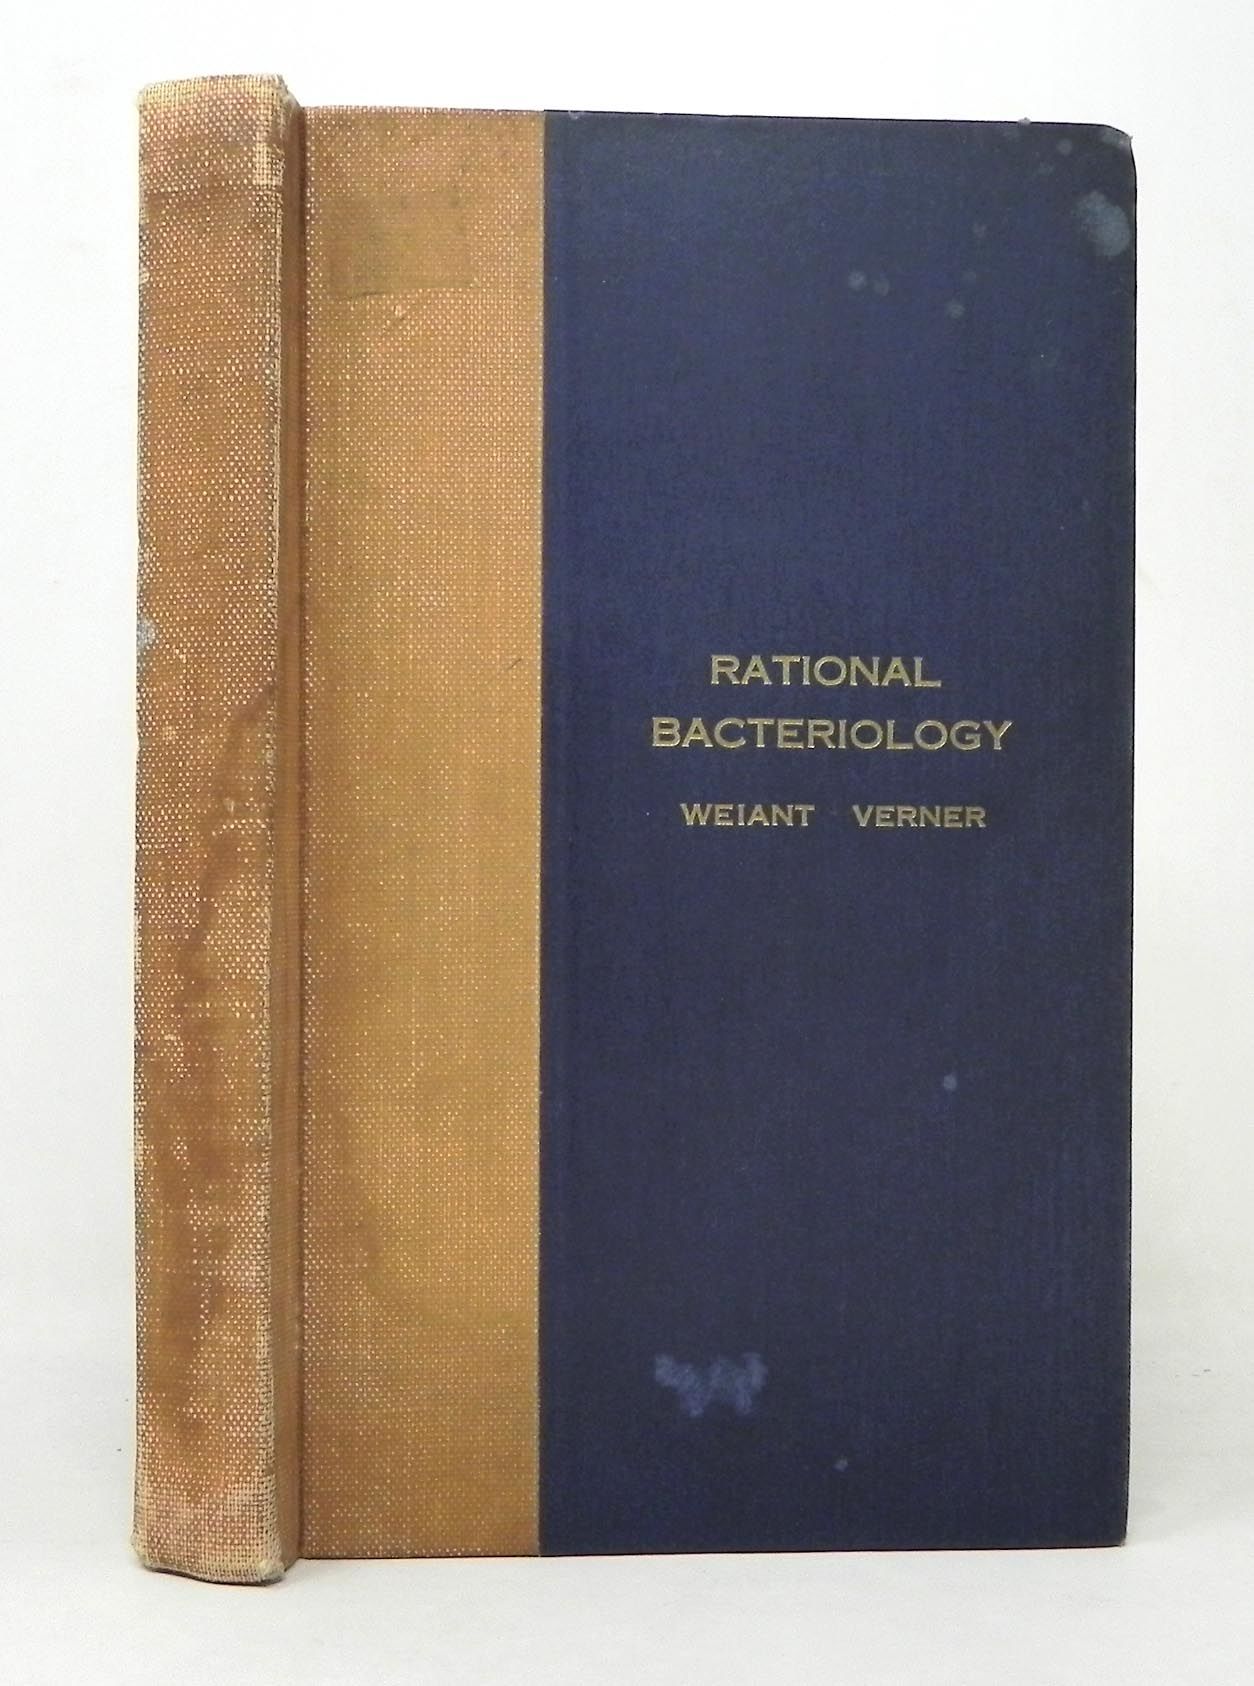 Rational Bacteriology – Verner, Weiant, Watkins (1953)